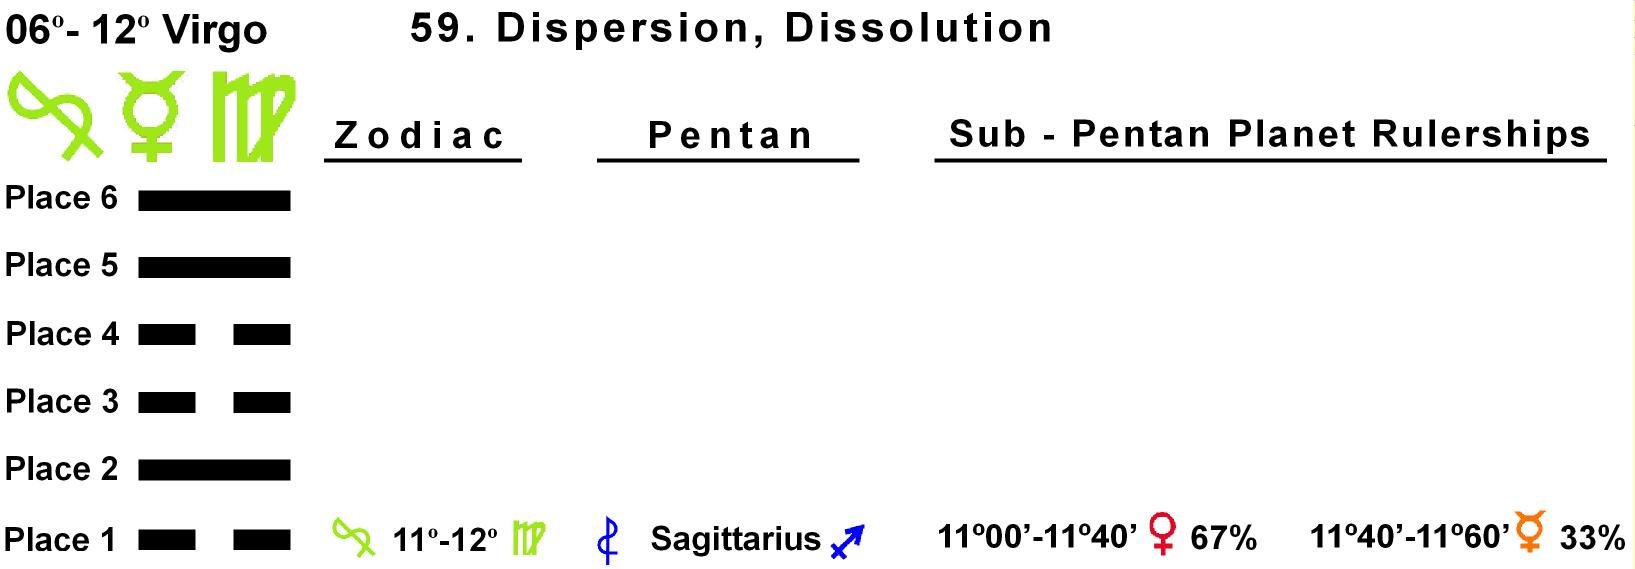 Pent-lines-06VI 11-12 Hx-59 Dispersion